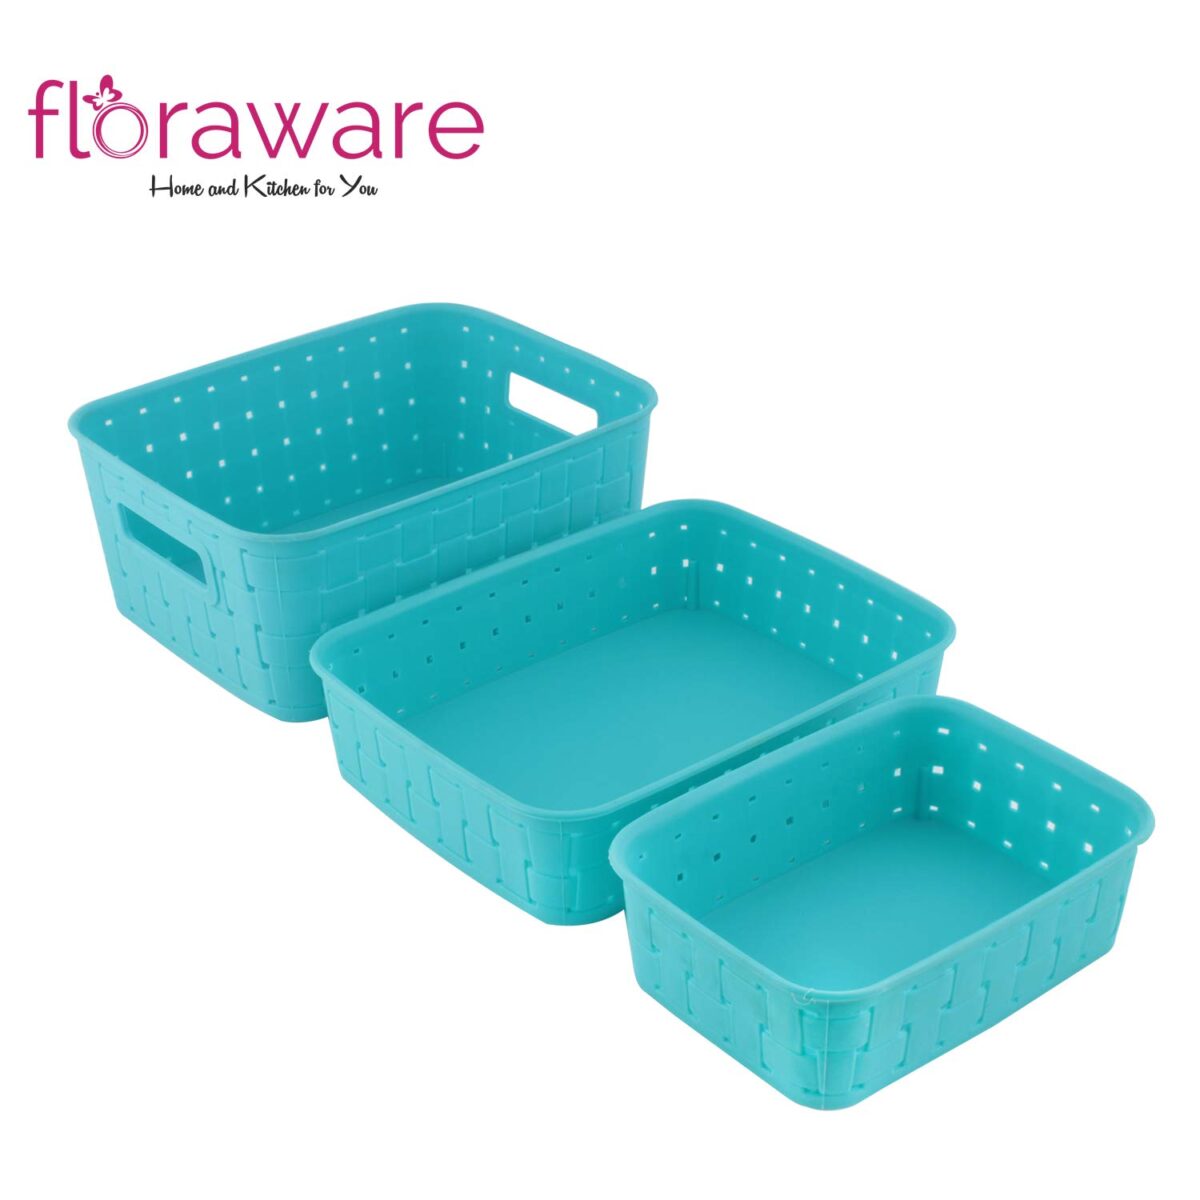 Floraware Smart Baskets for Storage Set of 3 Pieces, Blue